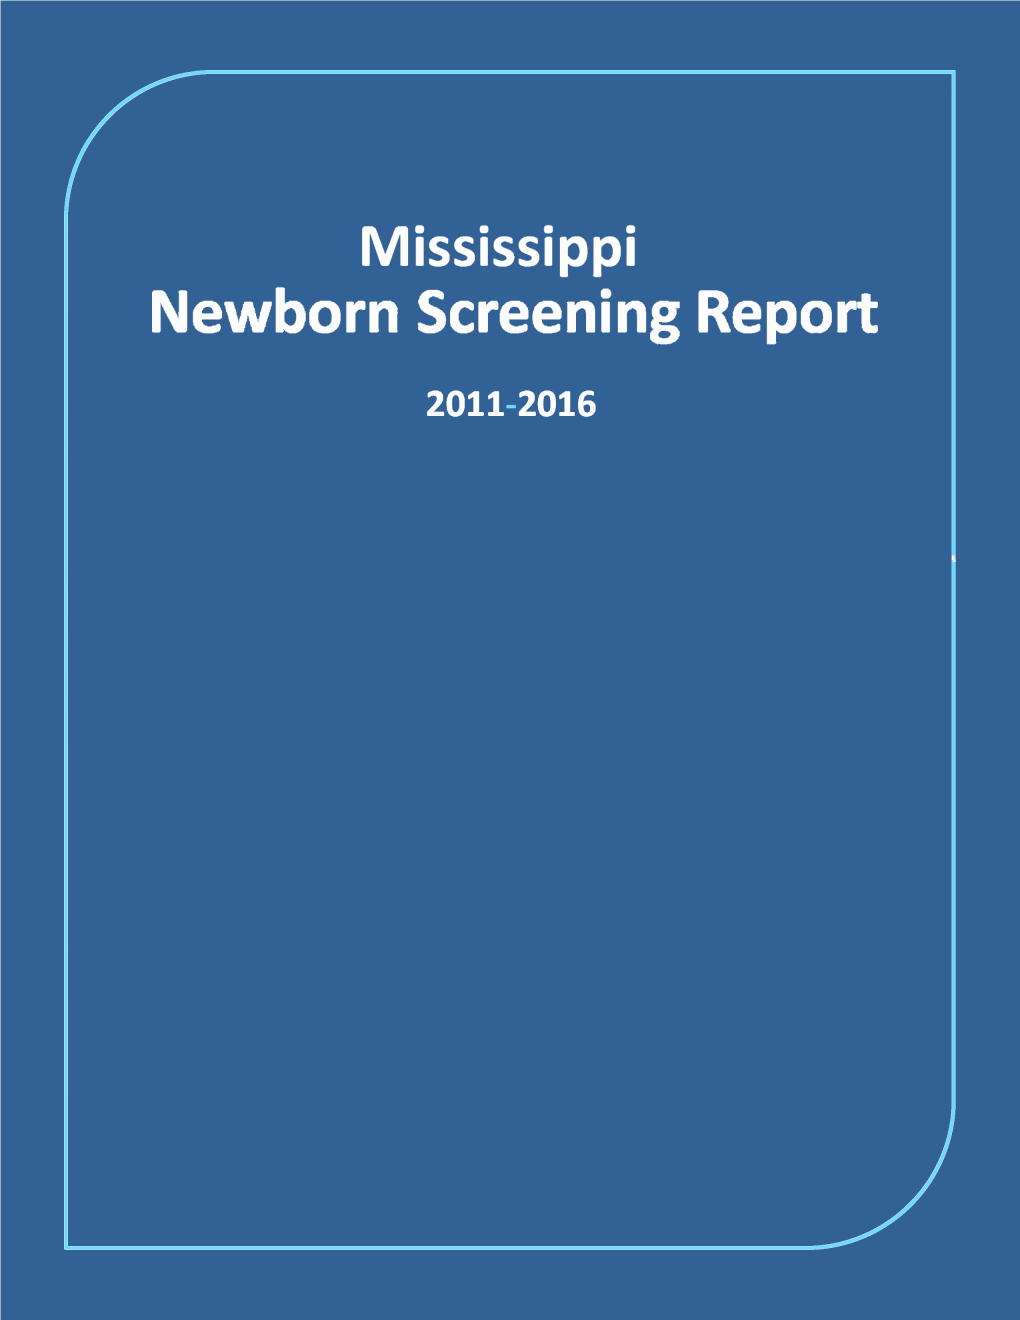 Newborn Screening Report 2011-2016